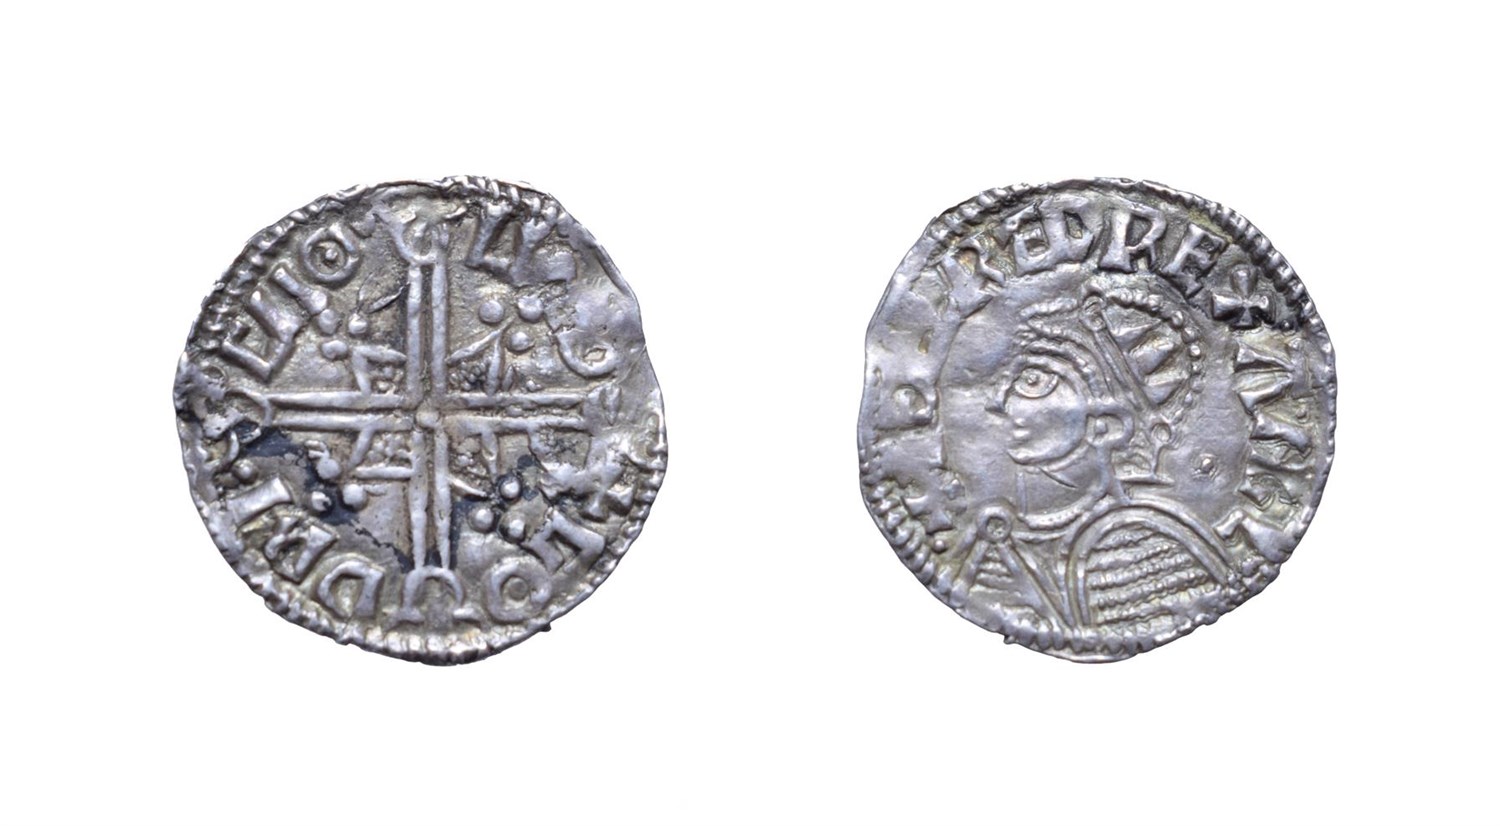 Lot 4034 - Aethelred II, 978 - 1016, London Mint Penny. 1.39g, 19.3mm, 3h. Helmet type, Godric at London. Obv